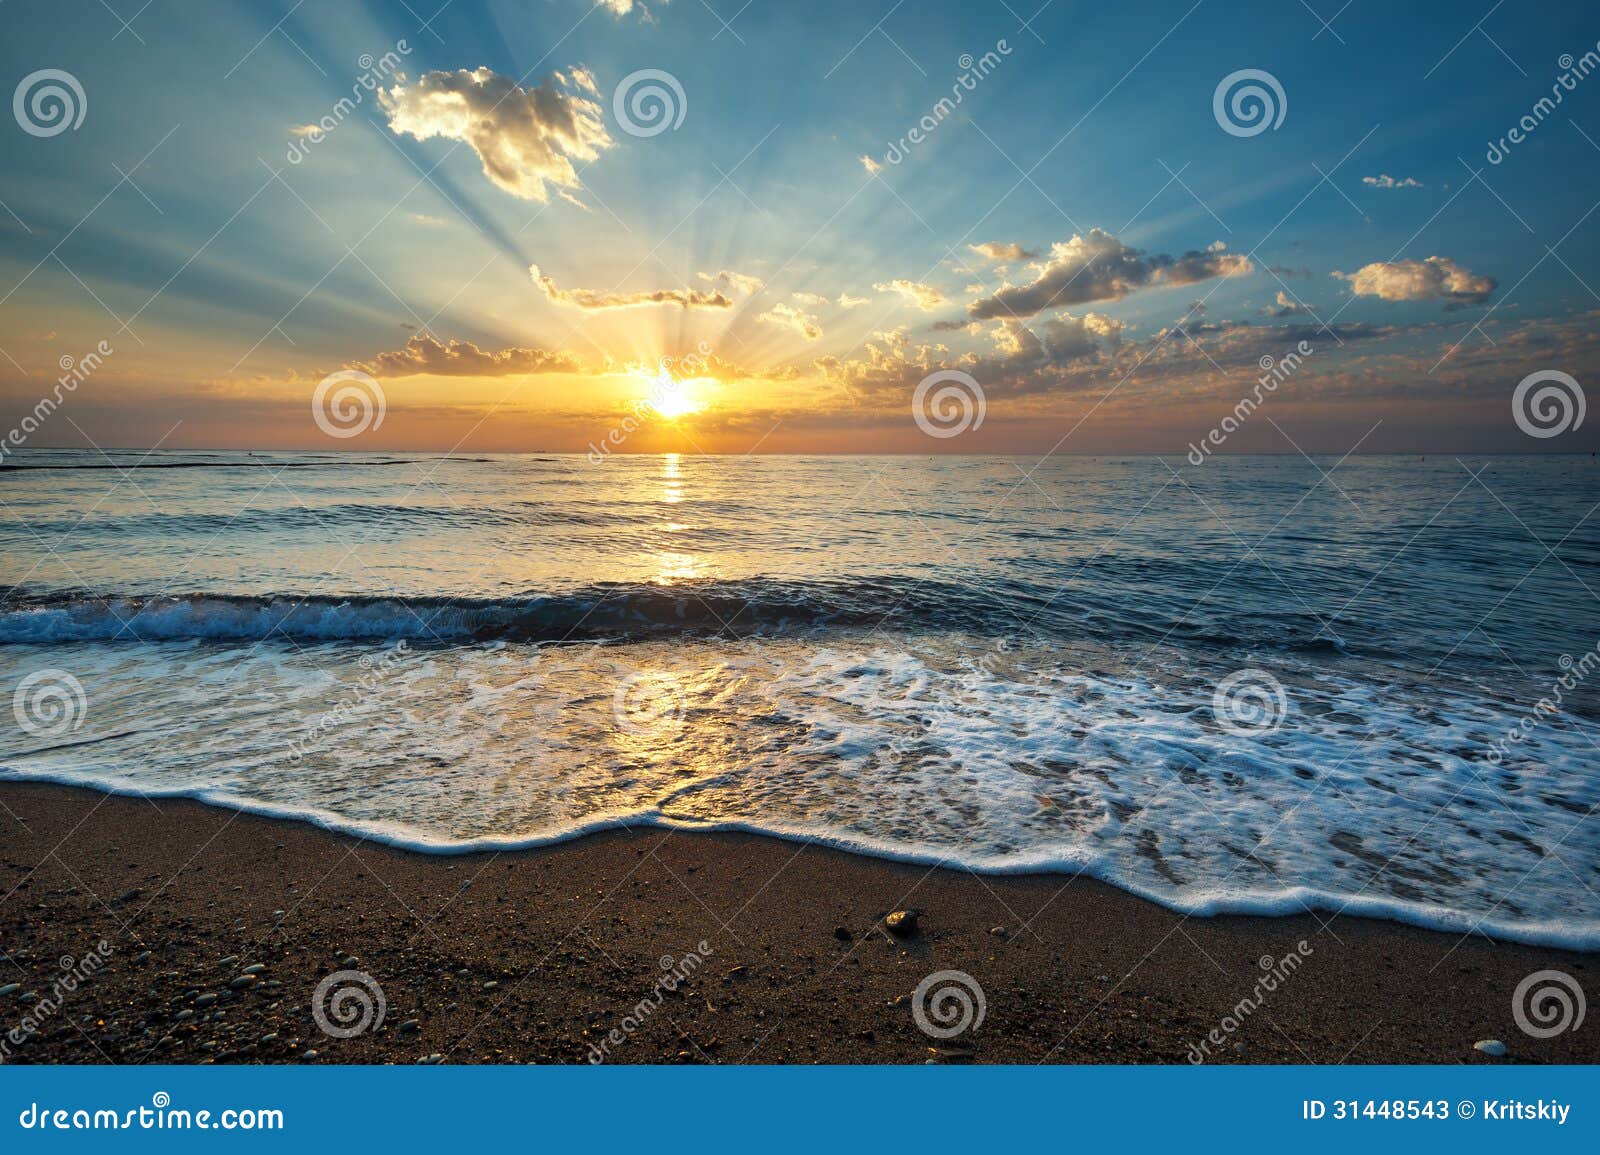 seascape background with on sunrise